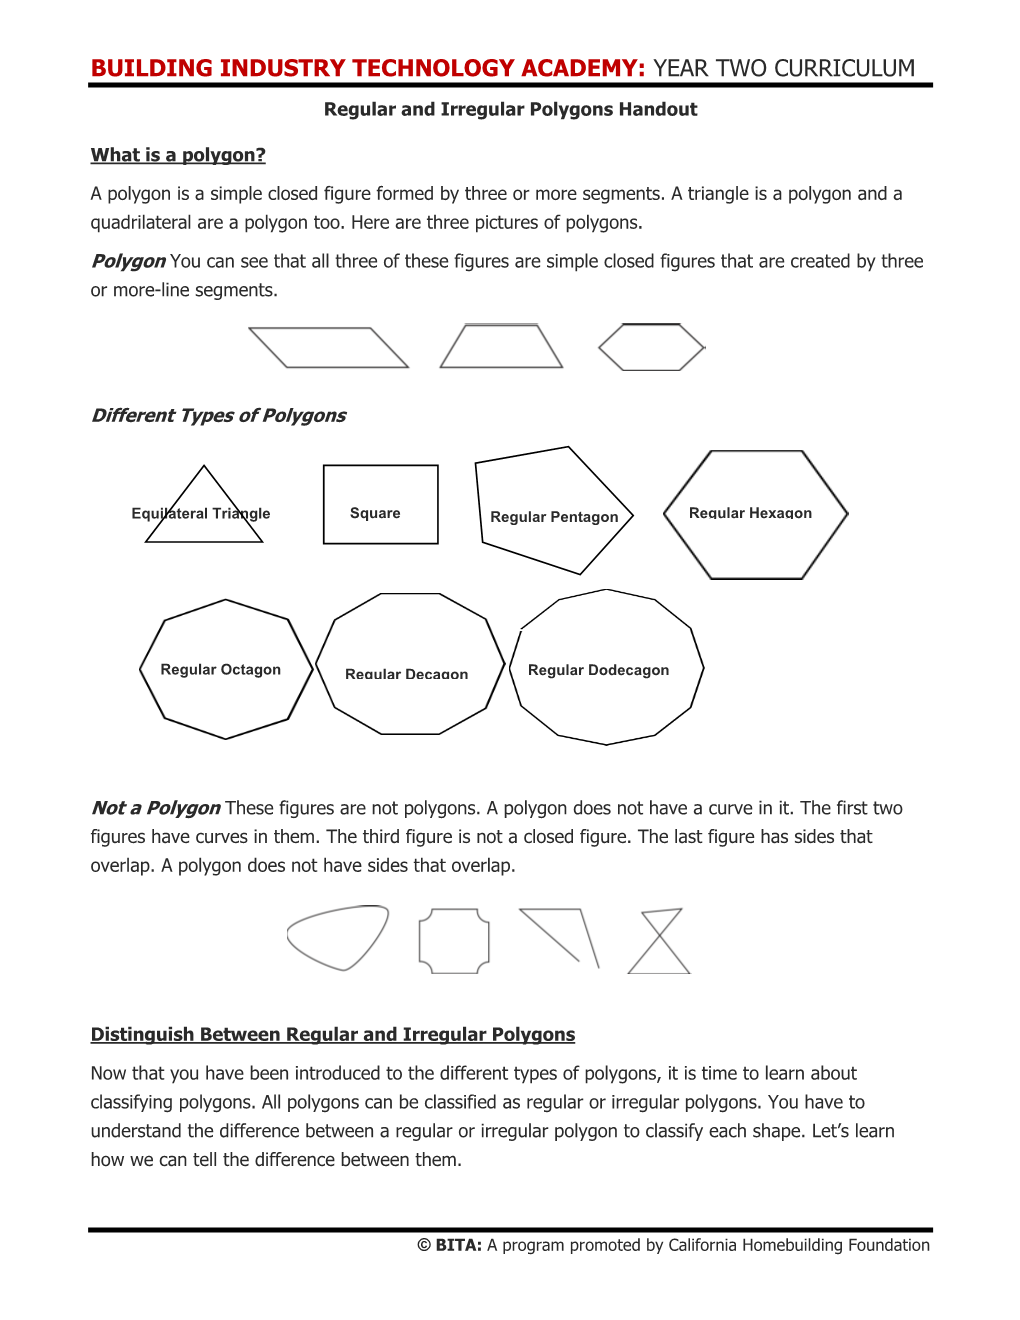 Regular and Irregular Polygons Handout